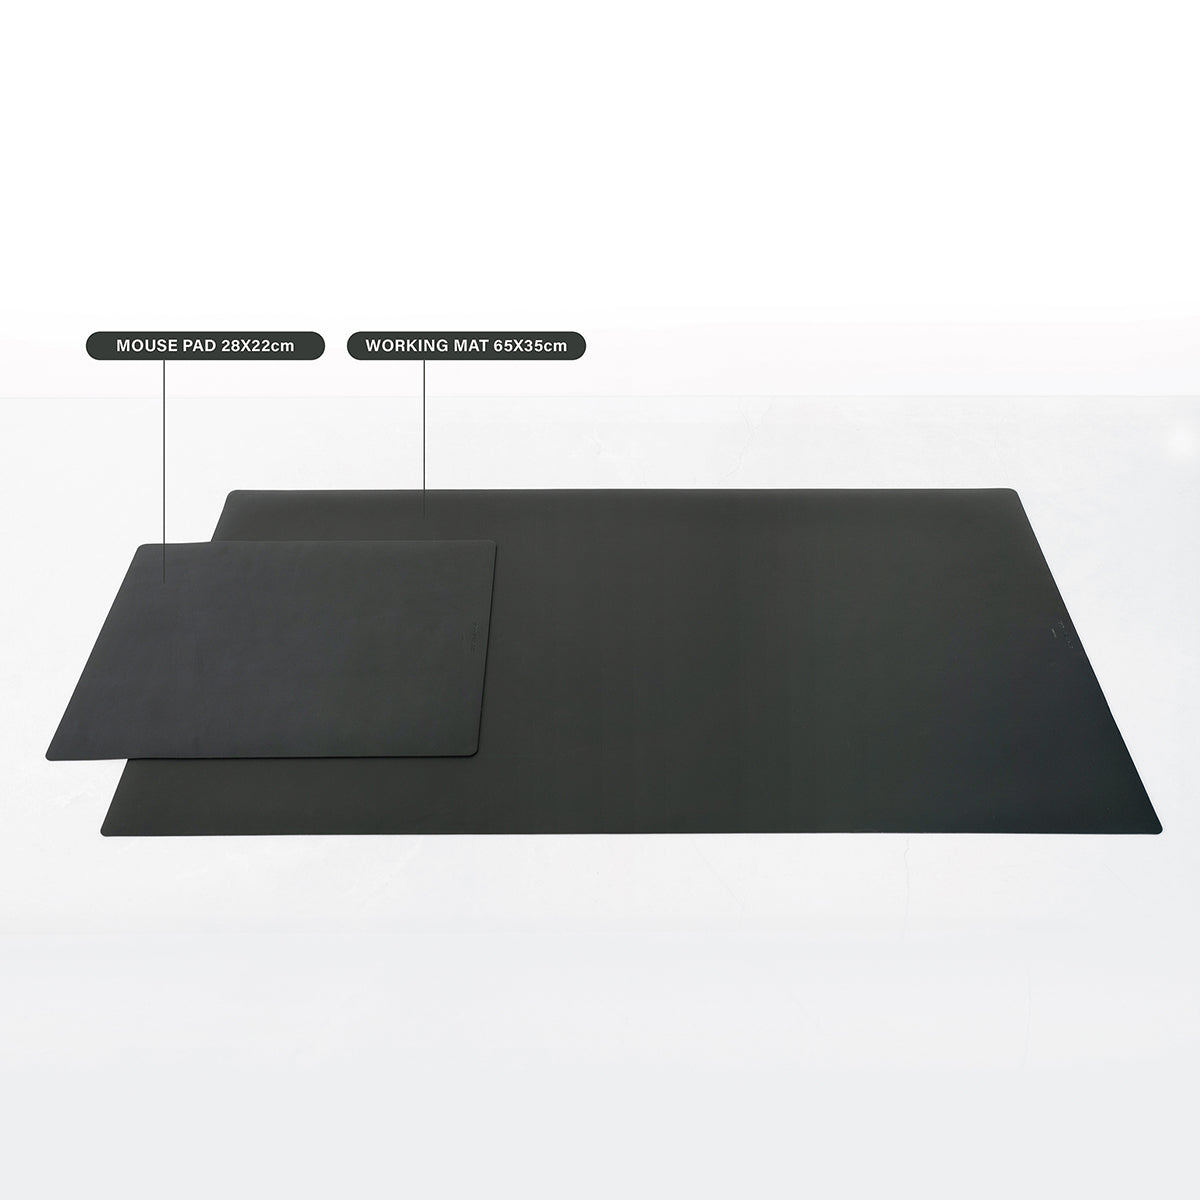 working mat, mouse pad, black mat